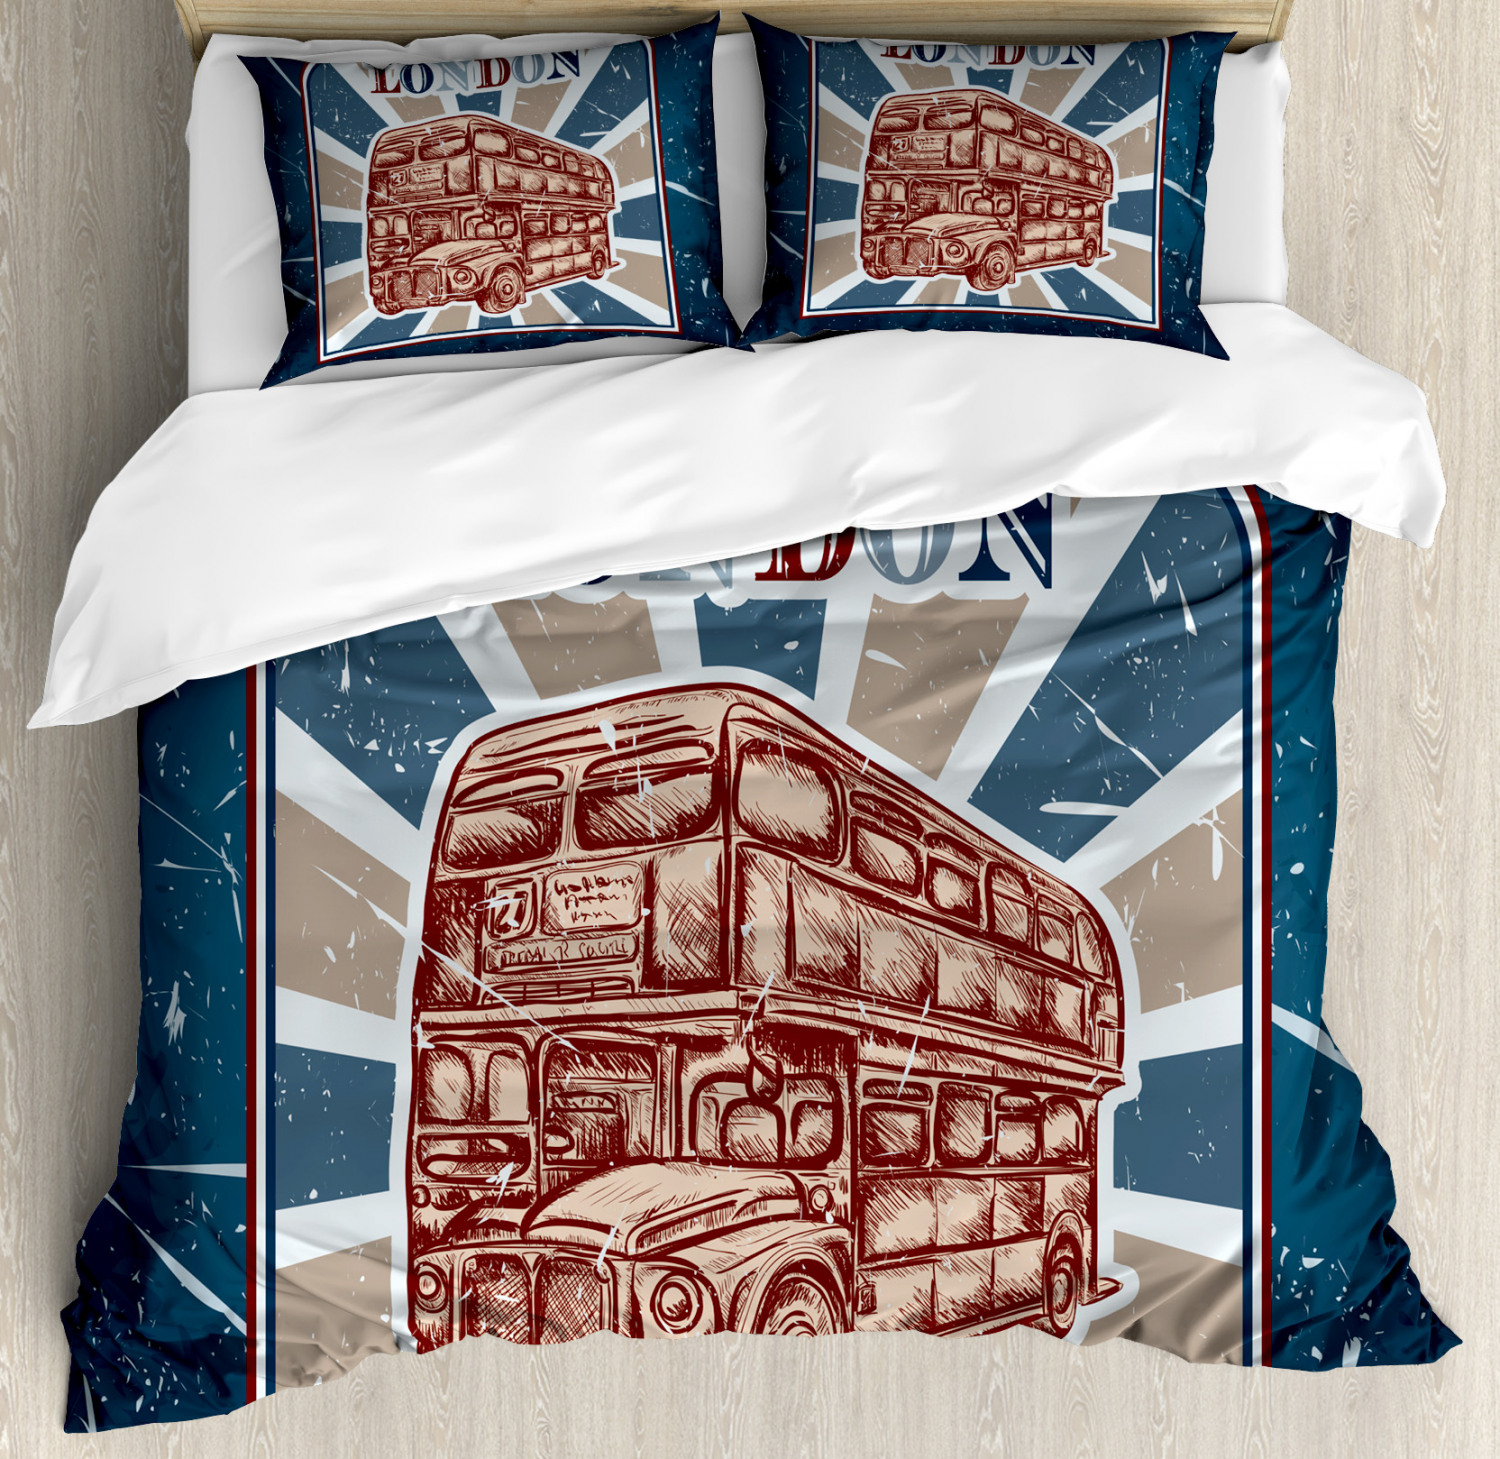 Vintage Duvet Cover Set With Pillow Shams English Bus Grunge Art